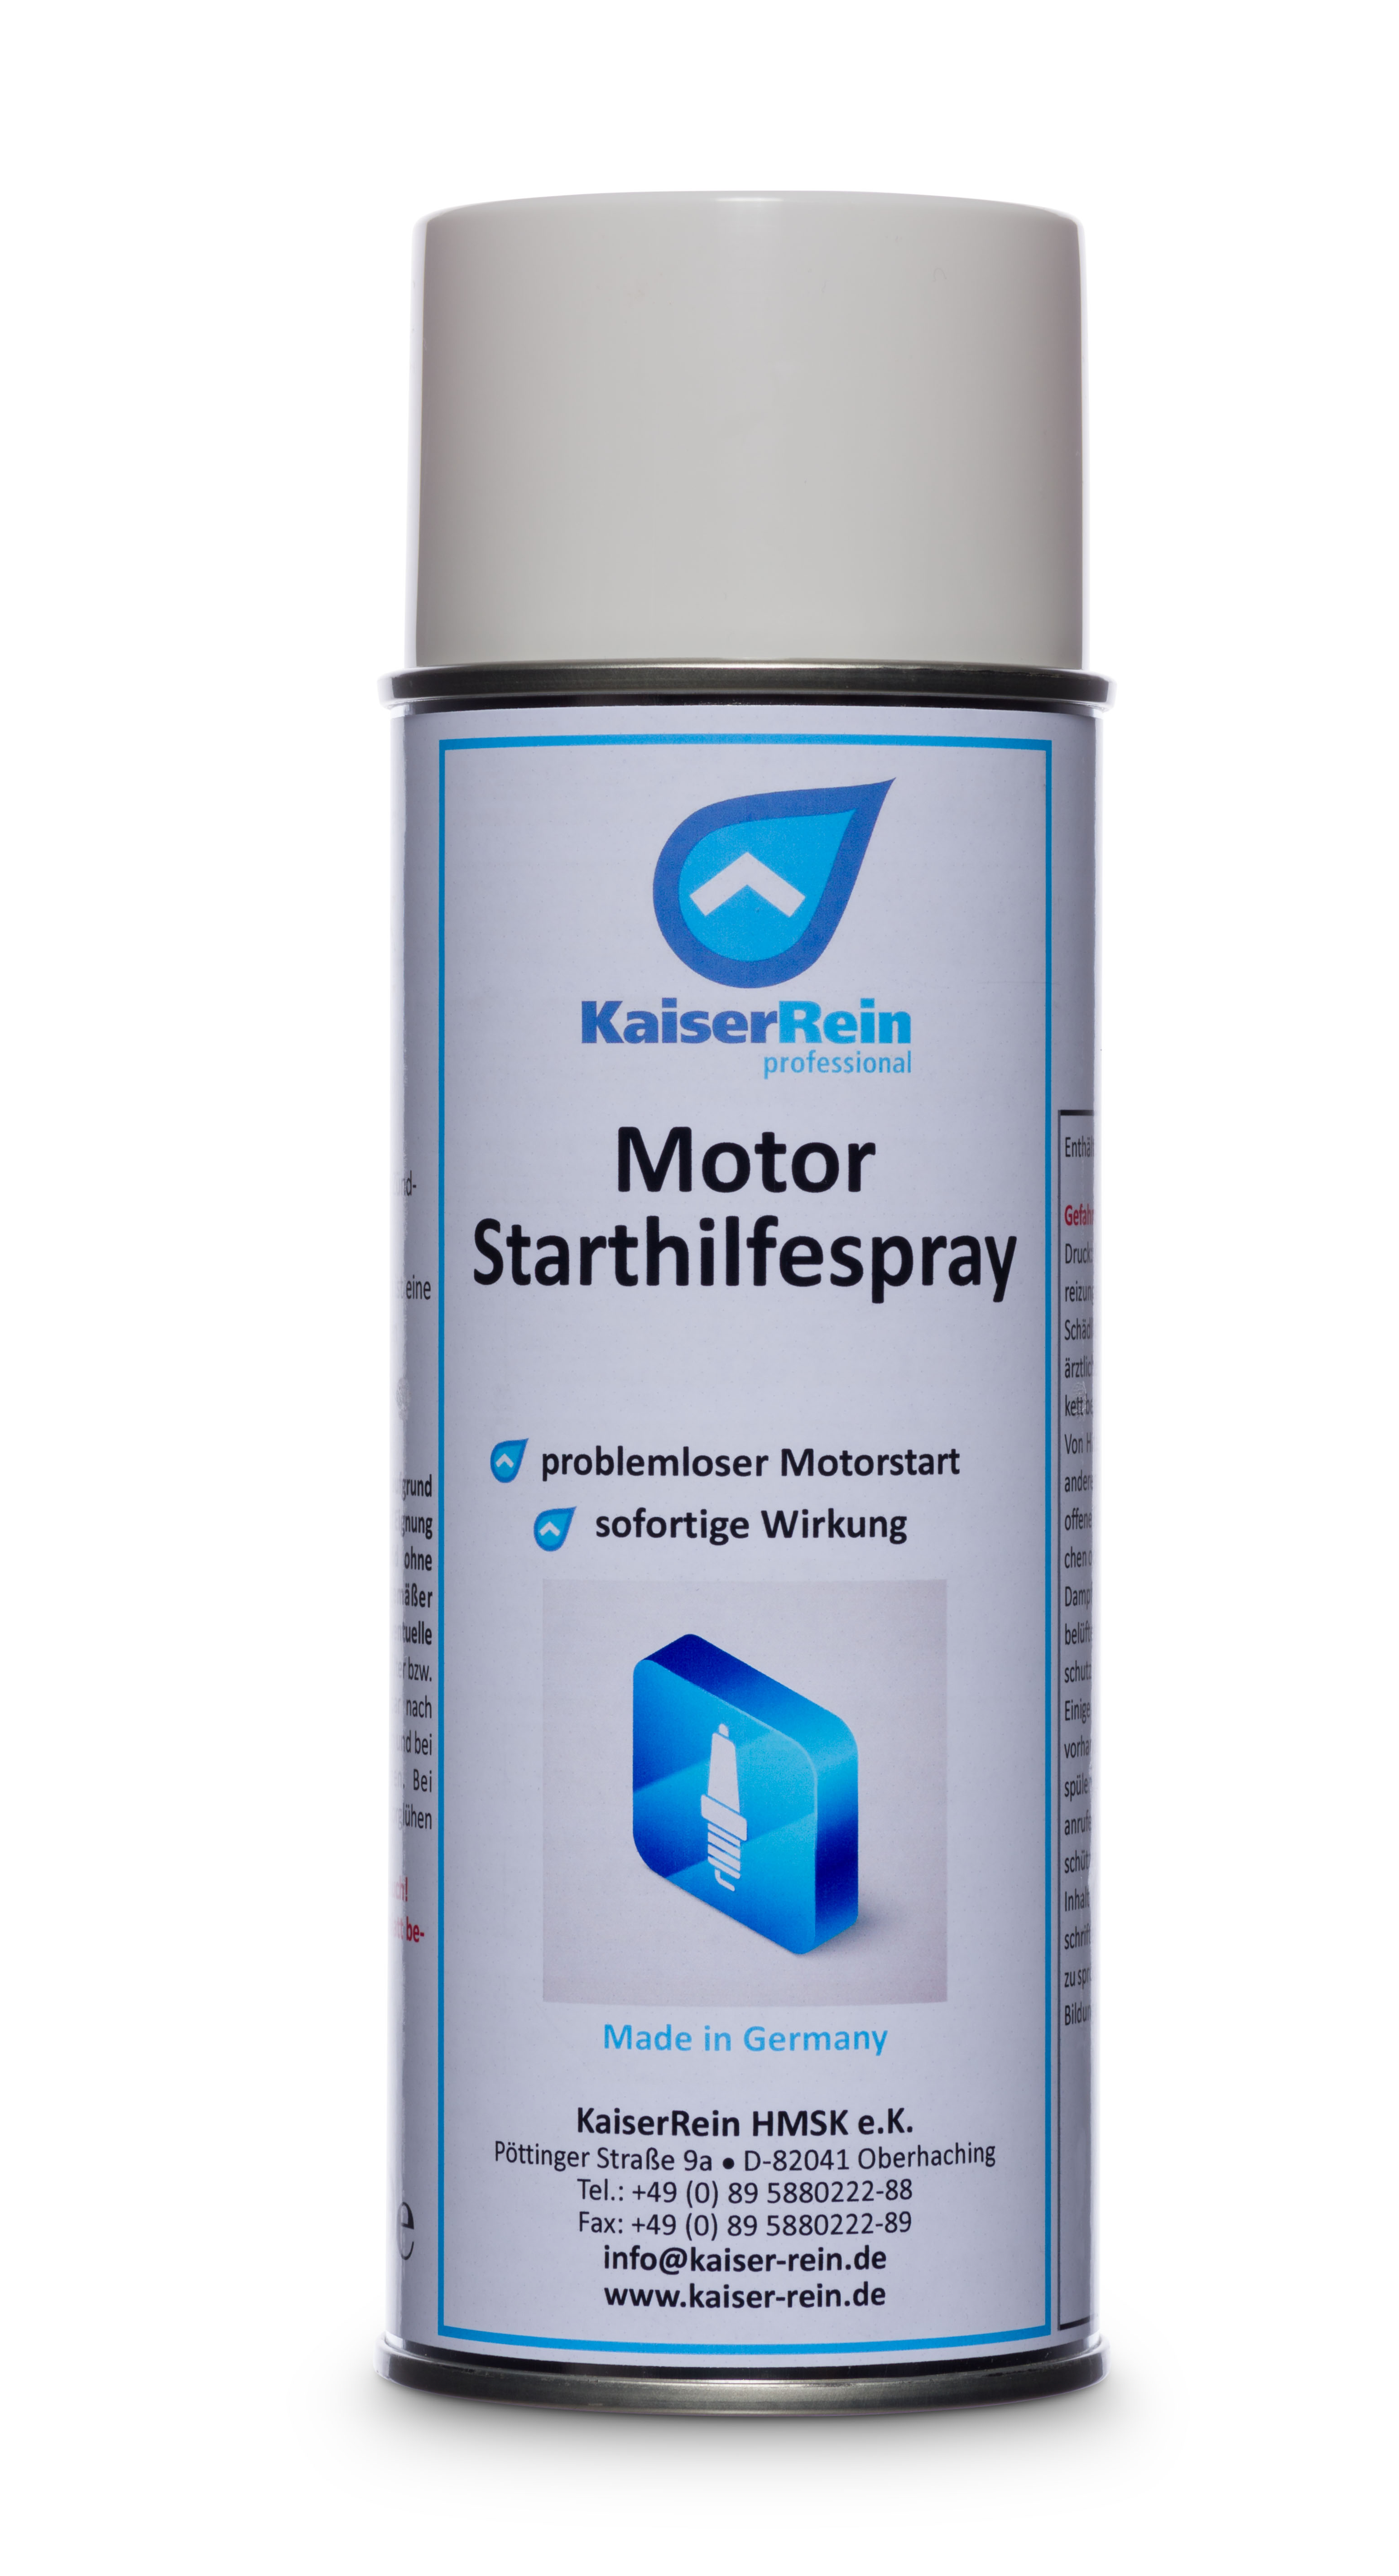 Motor Starthilfespray erleichtert den Motorstart bei Rasenmäher, Roller, Kettensägen und Motorgeräte